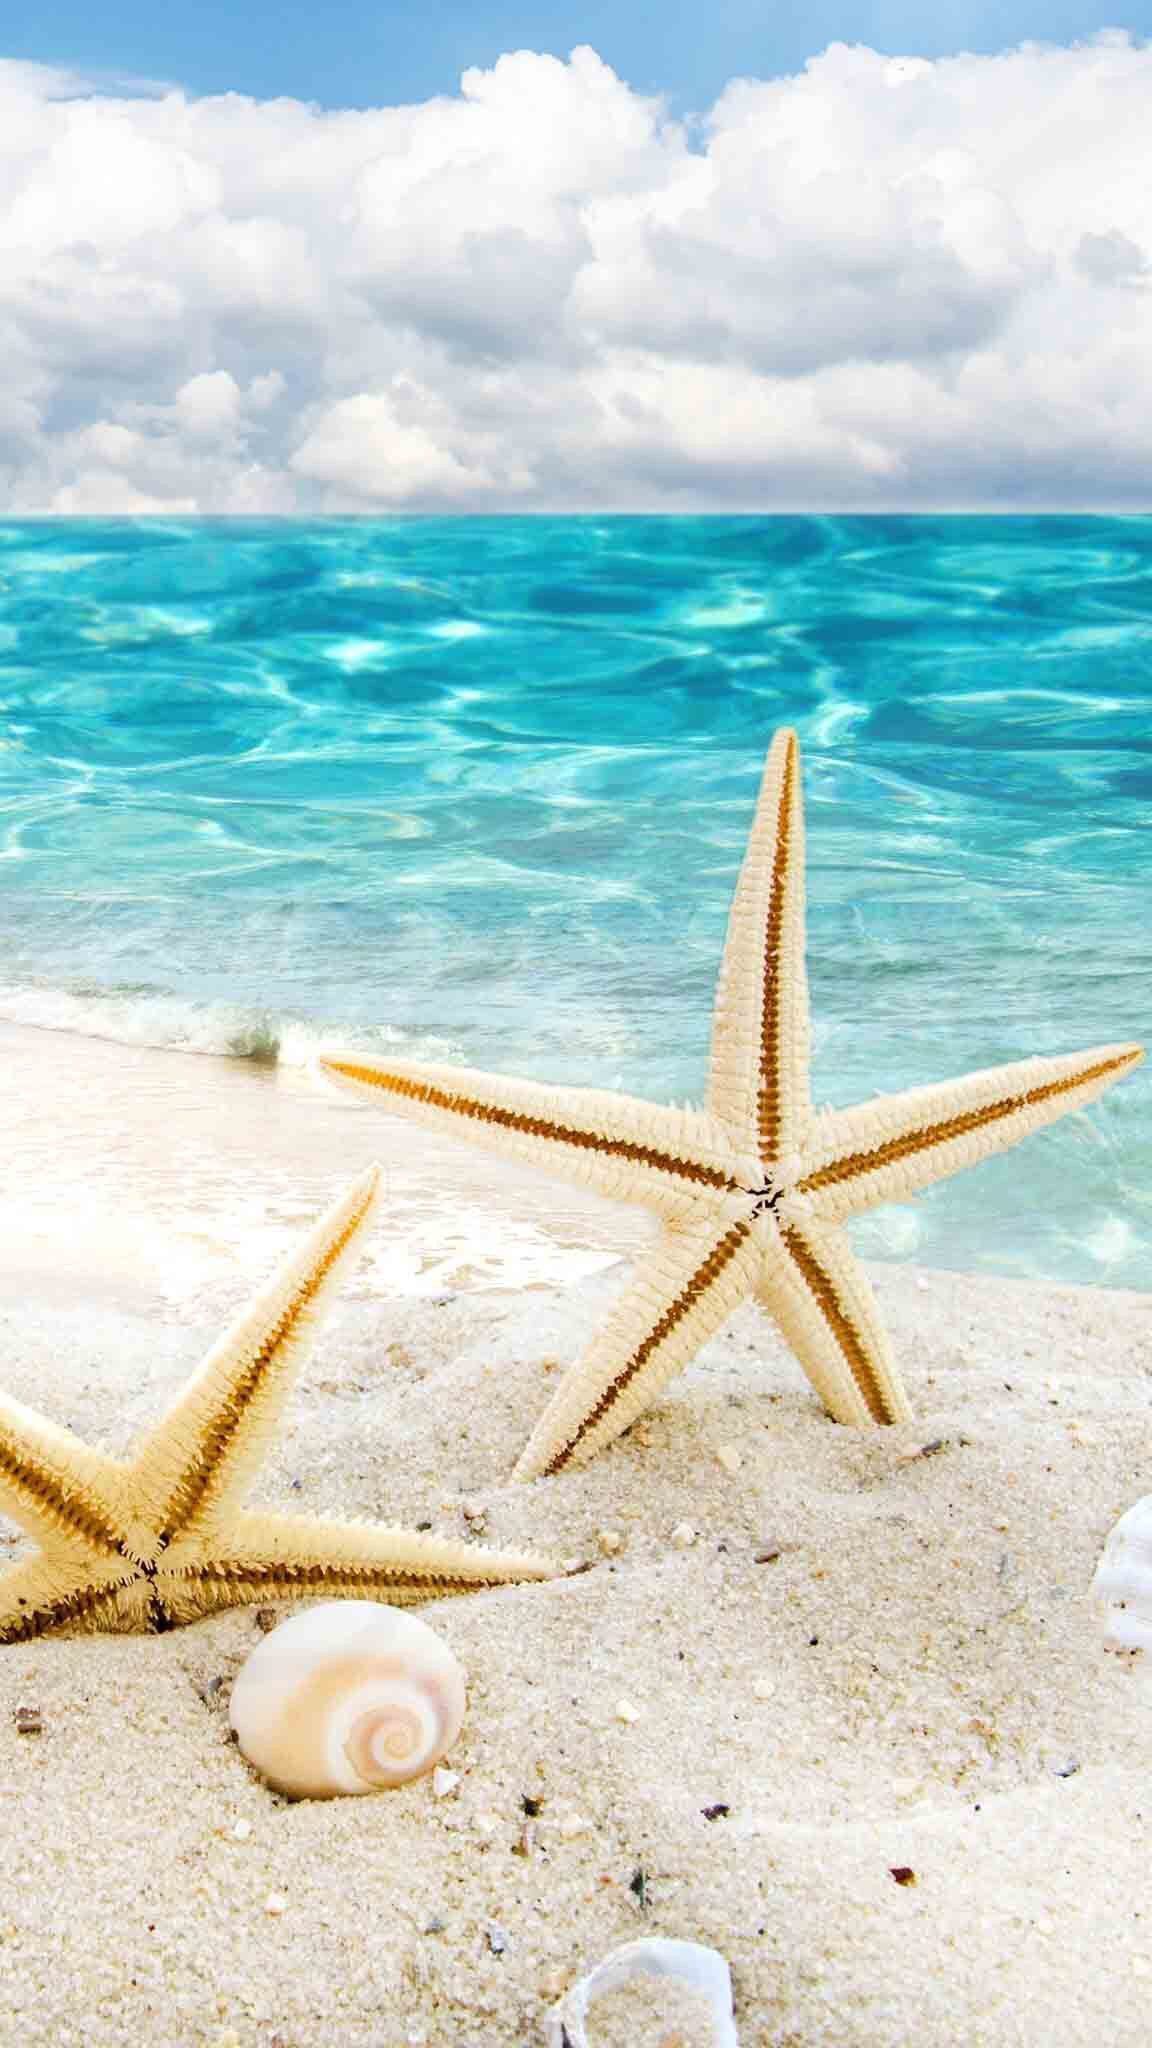 Starfish & Seashells on the beach. Beach scenes, Sea shells, Beach